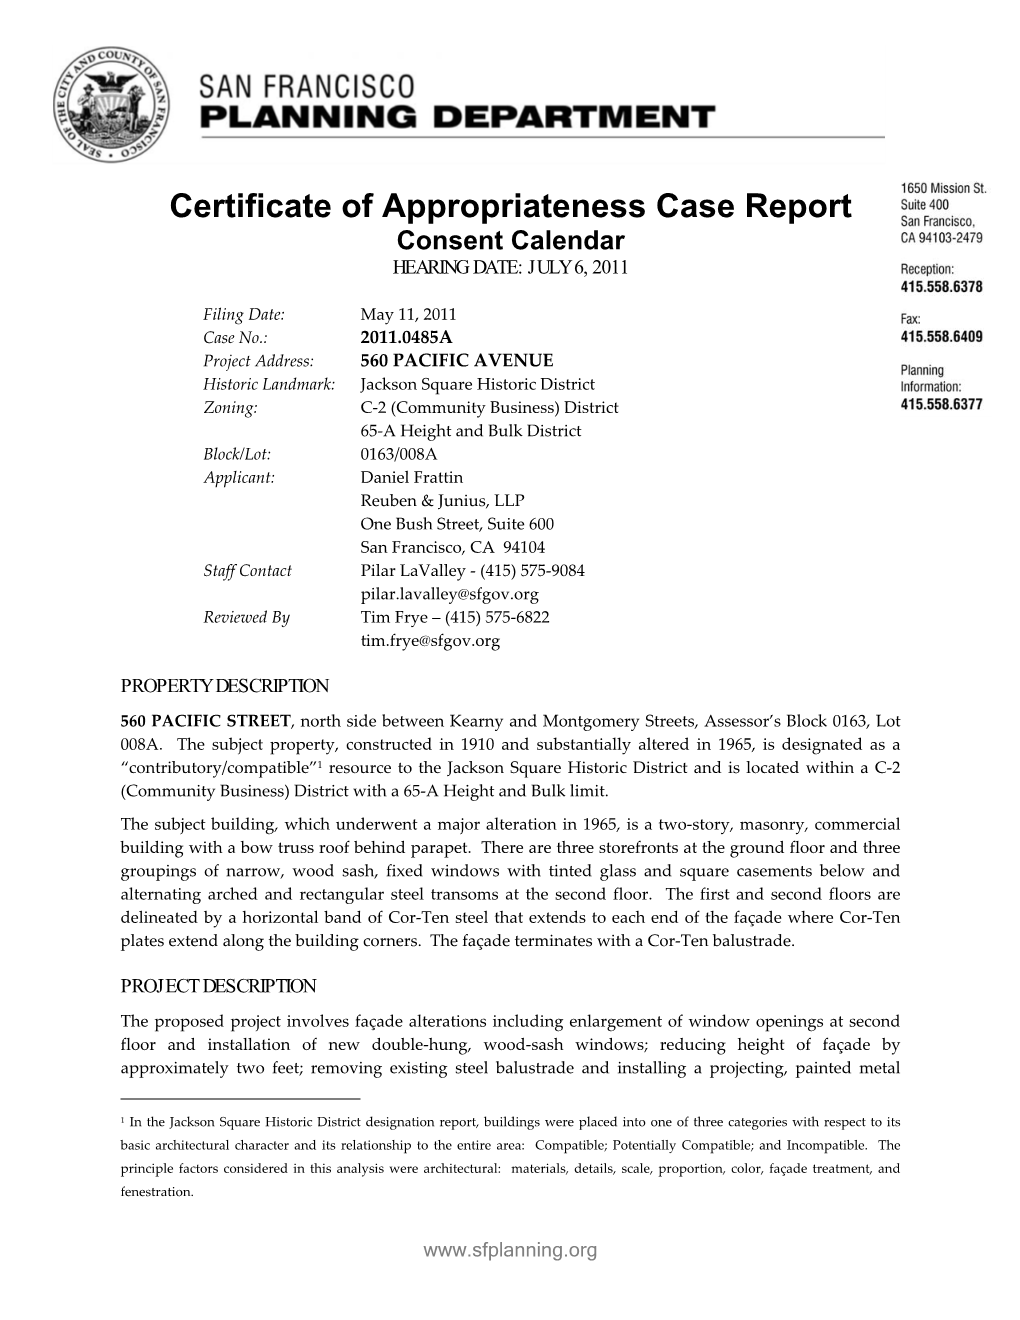 Certificate of Appropriateness Case Report Consent Calendar HEARING DATE: JULY 6, 2011